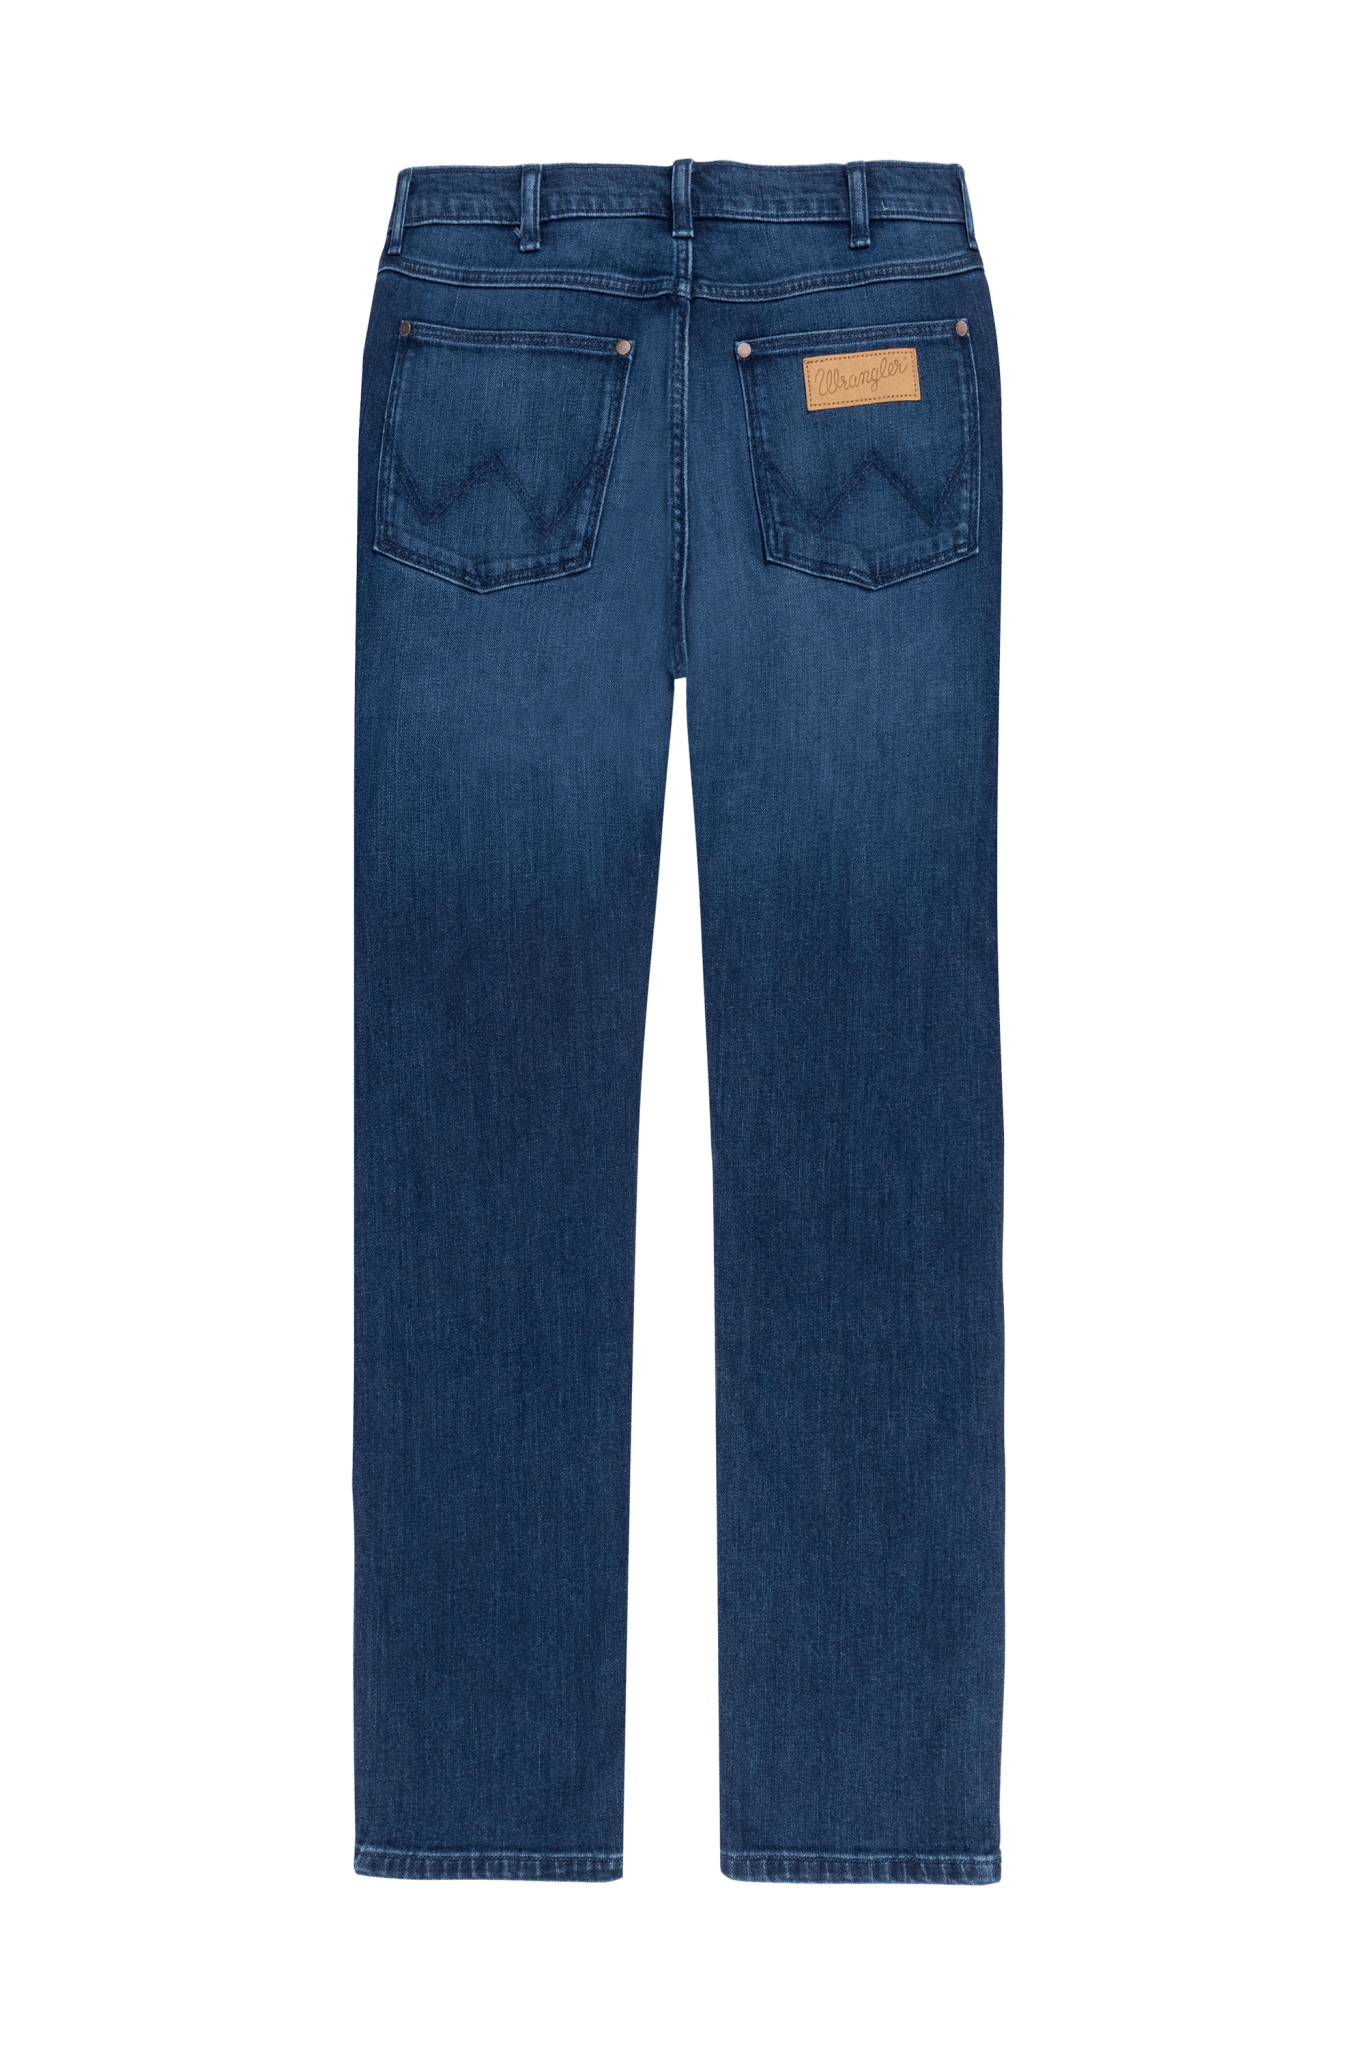 WRANGLER - ג'ינס LARSTON בצבע כחול - MASHBIR//365